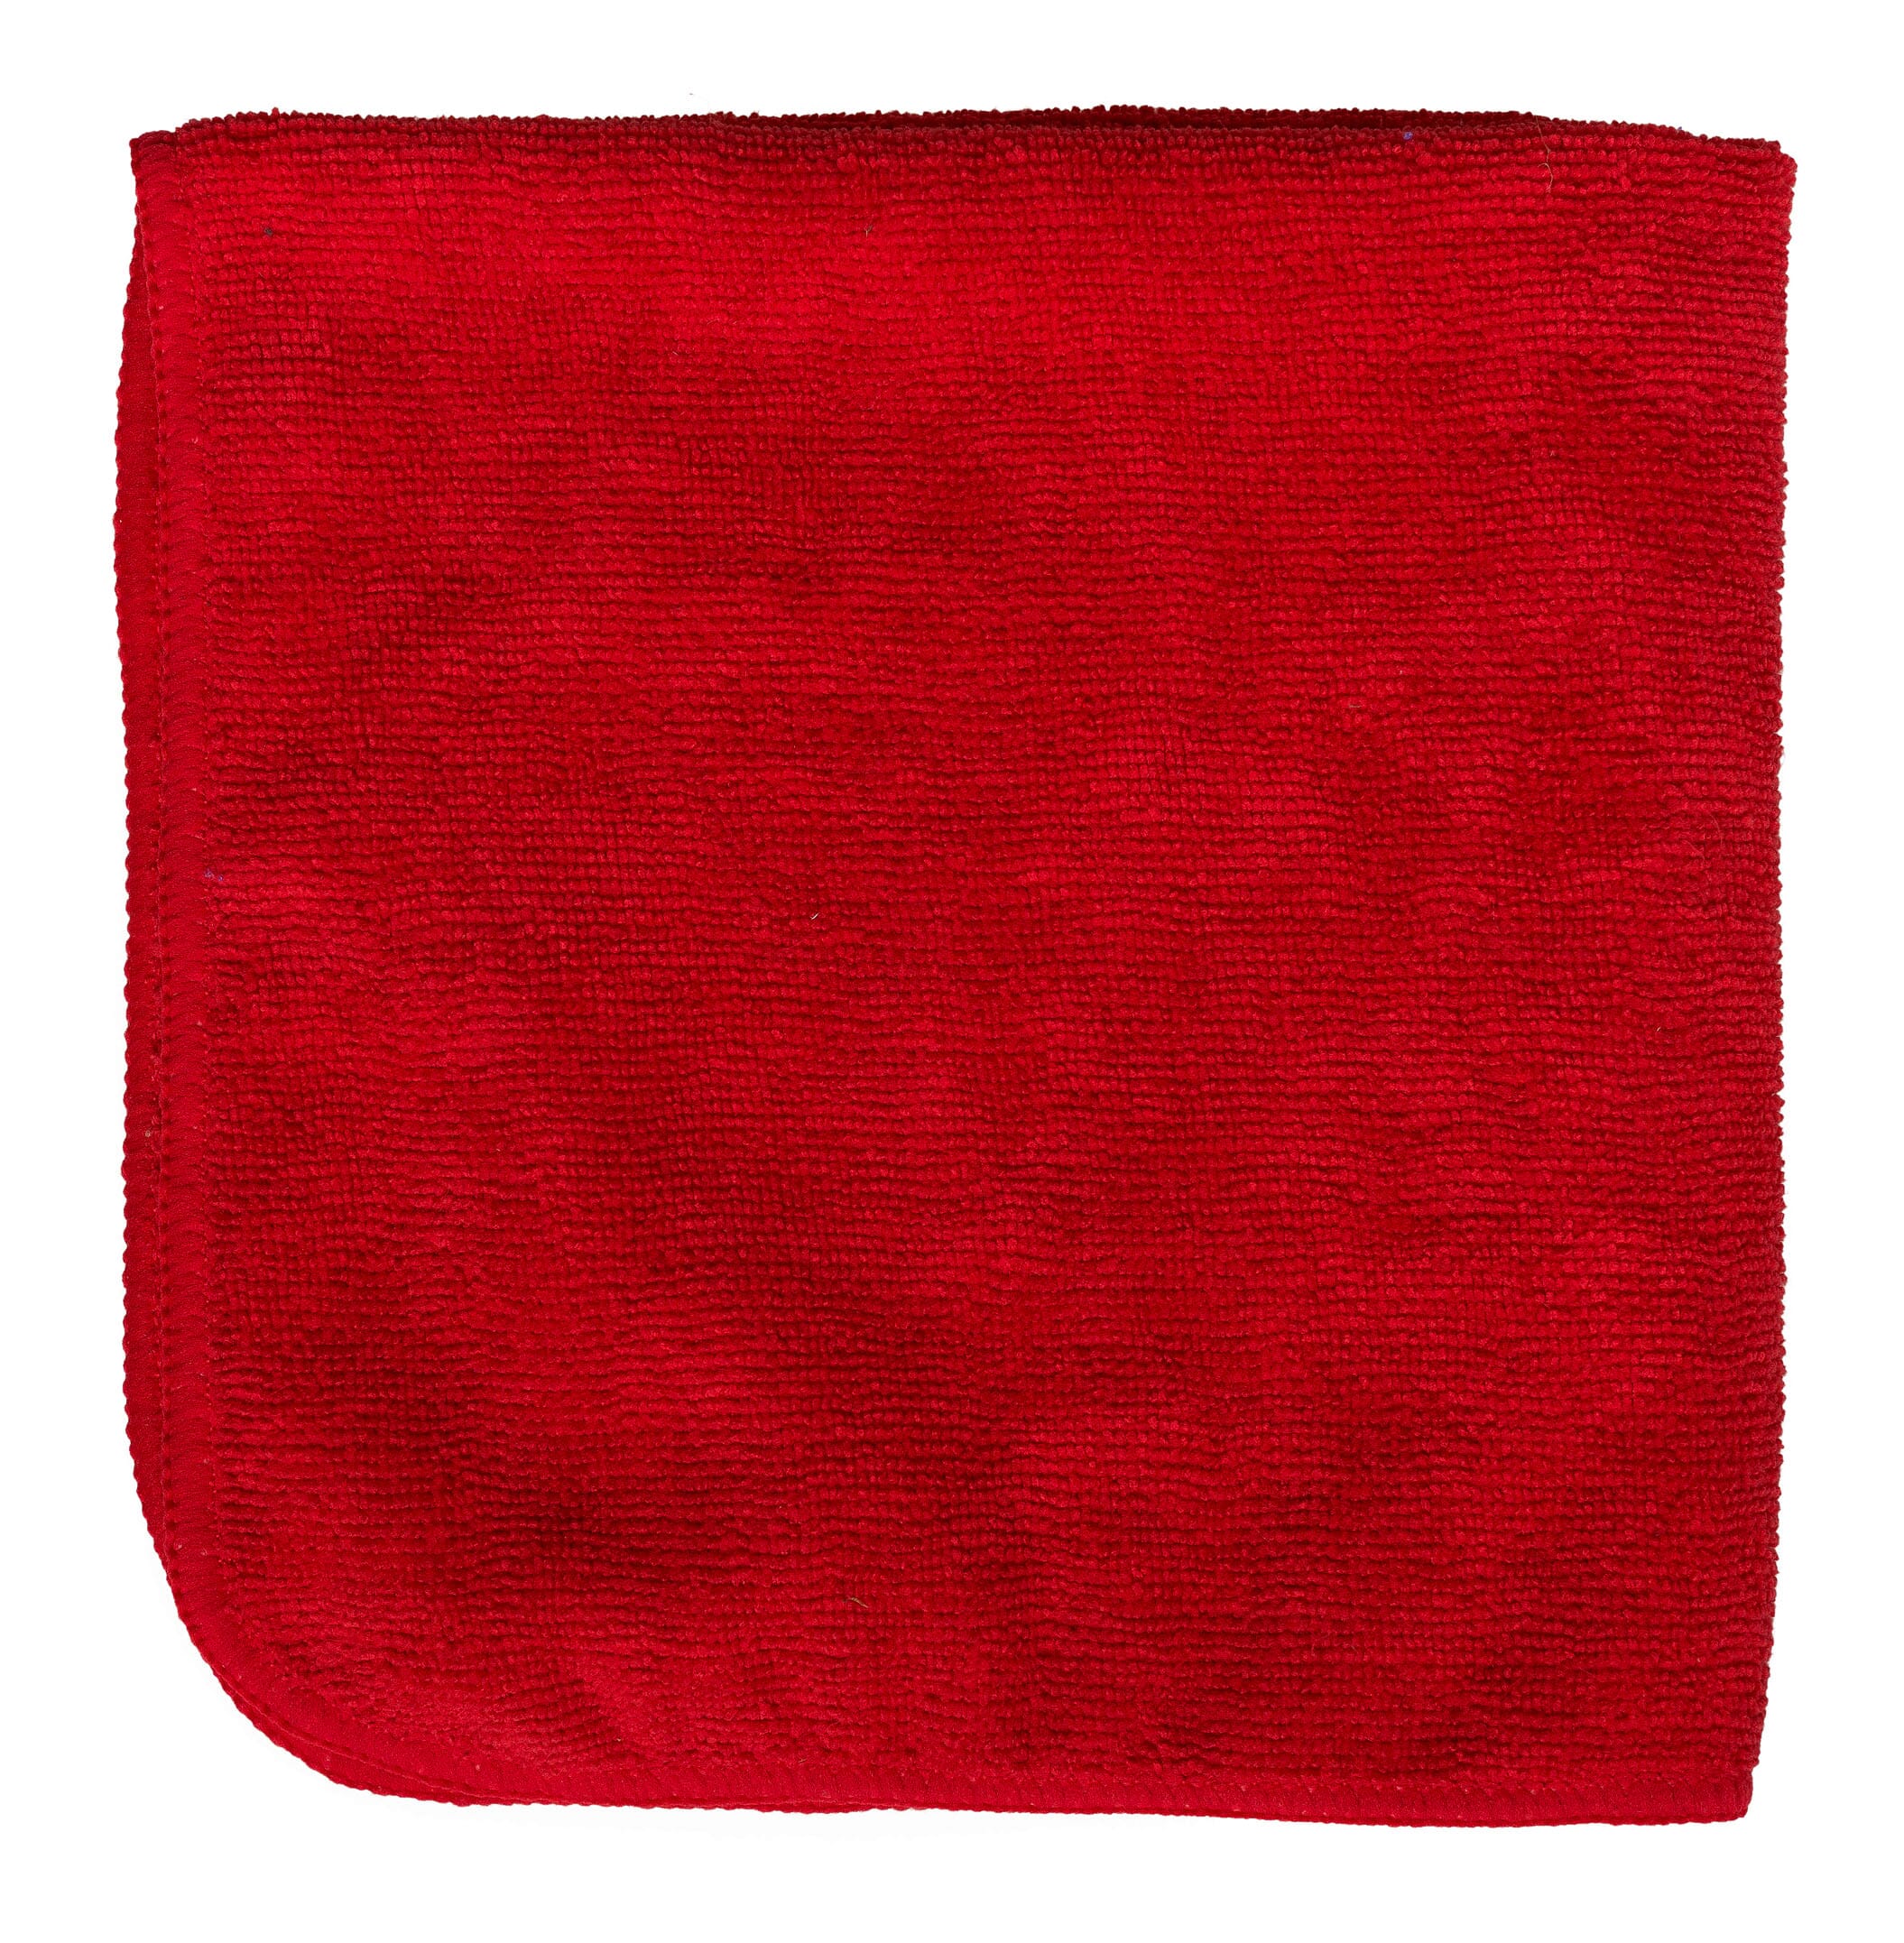 16" X 16" Microfiber Cloth Red